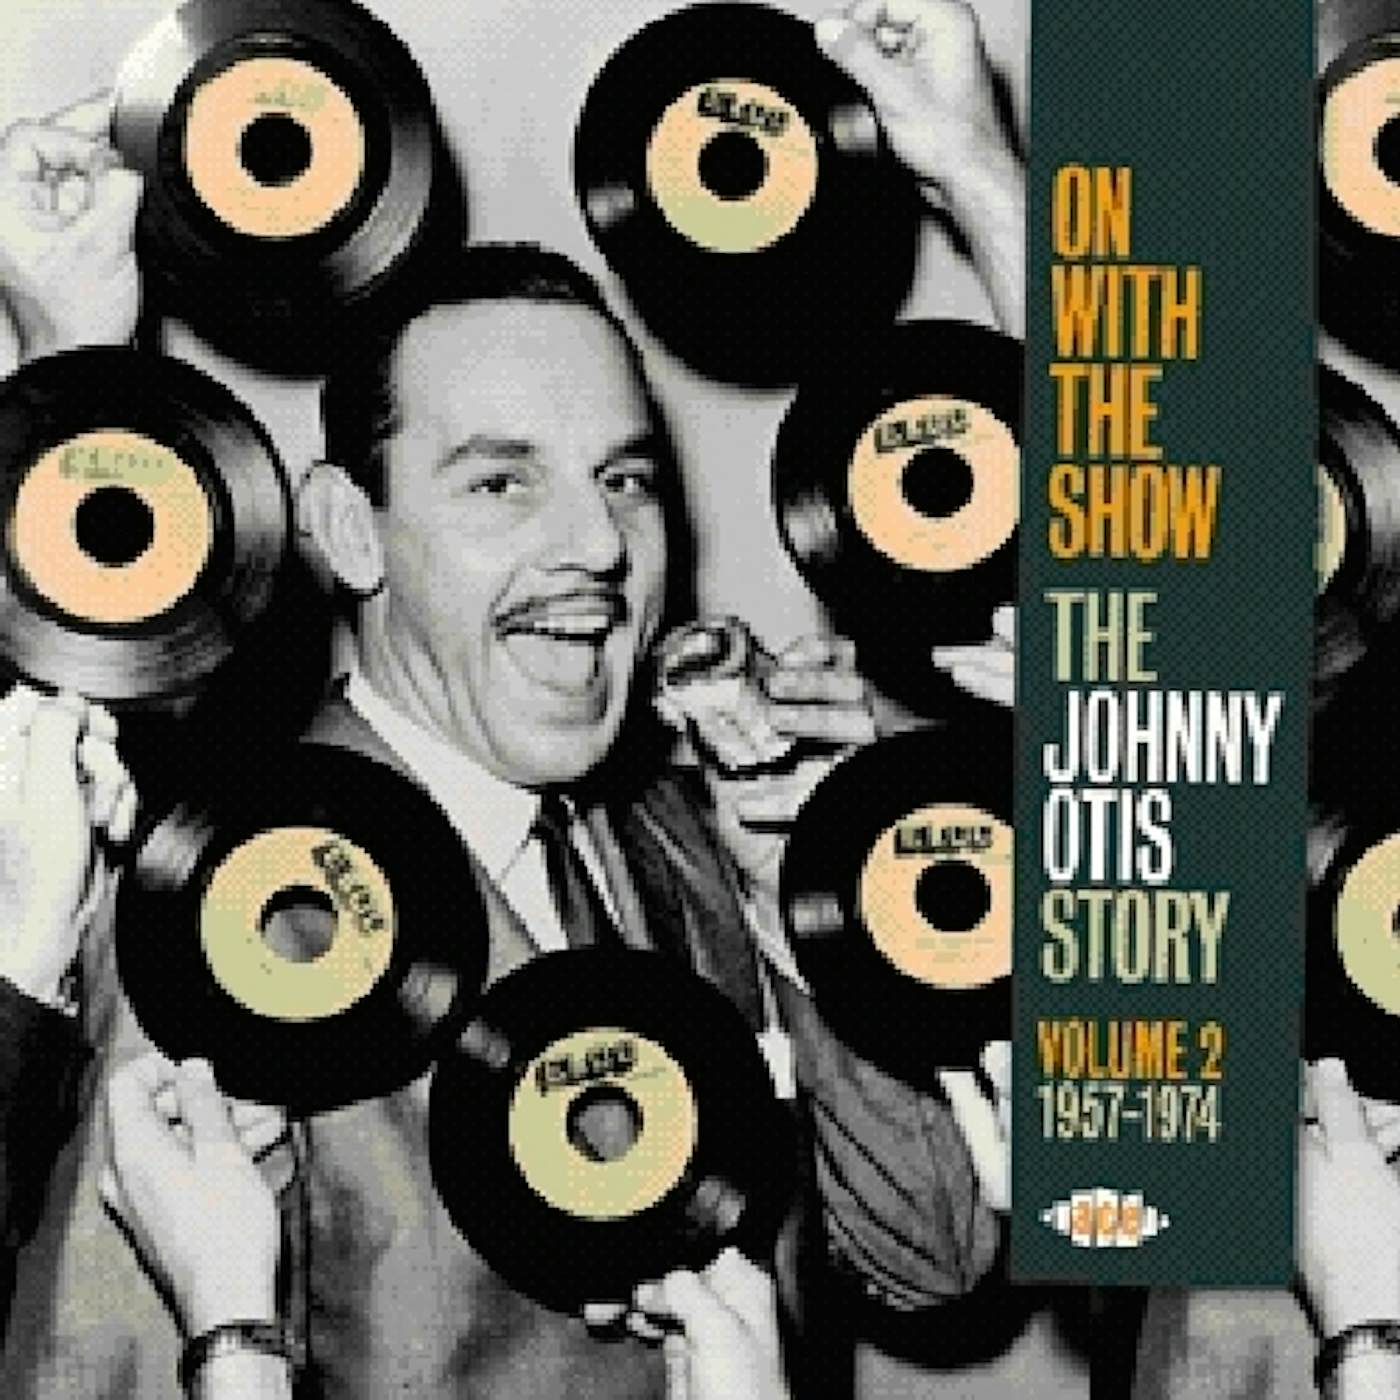 Johnny Otis ON WITH THE SHOW: STORY V2 1957 - 1974 CD